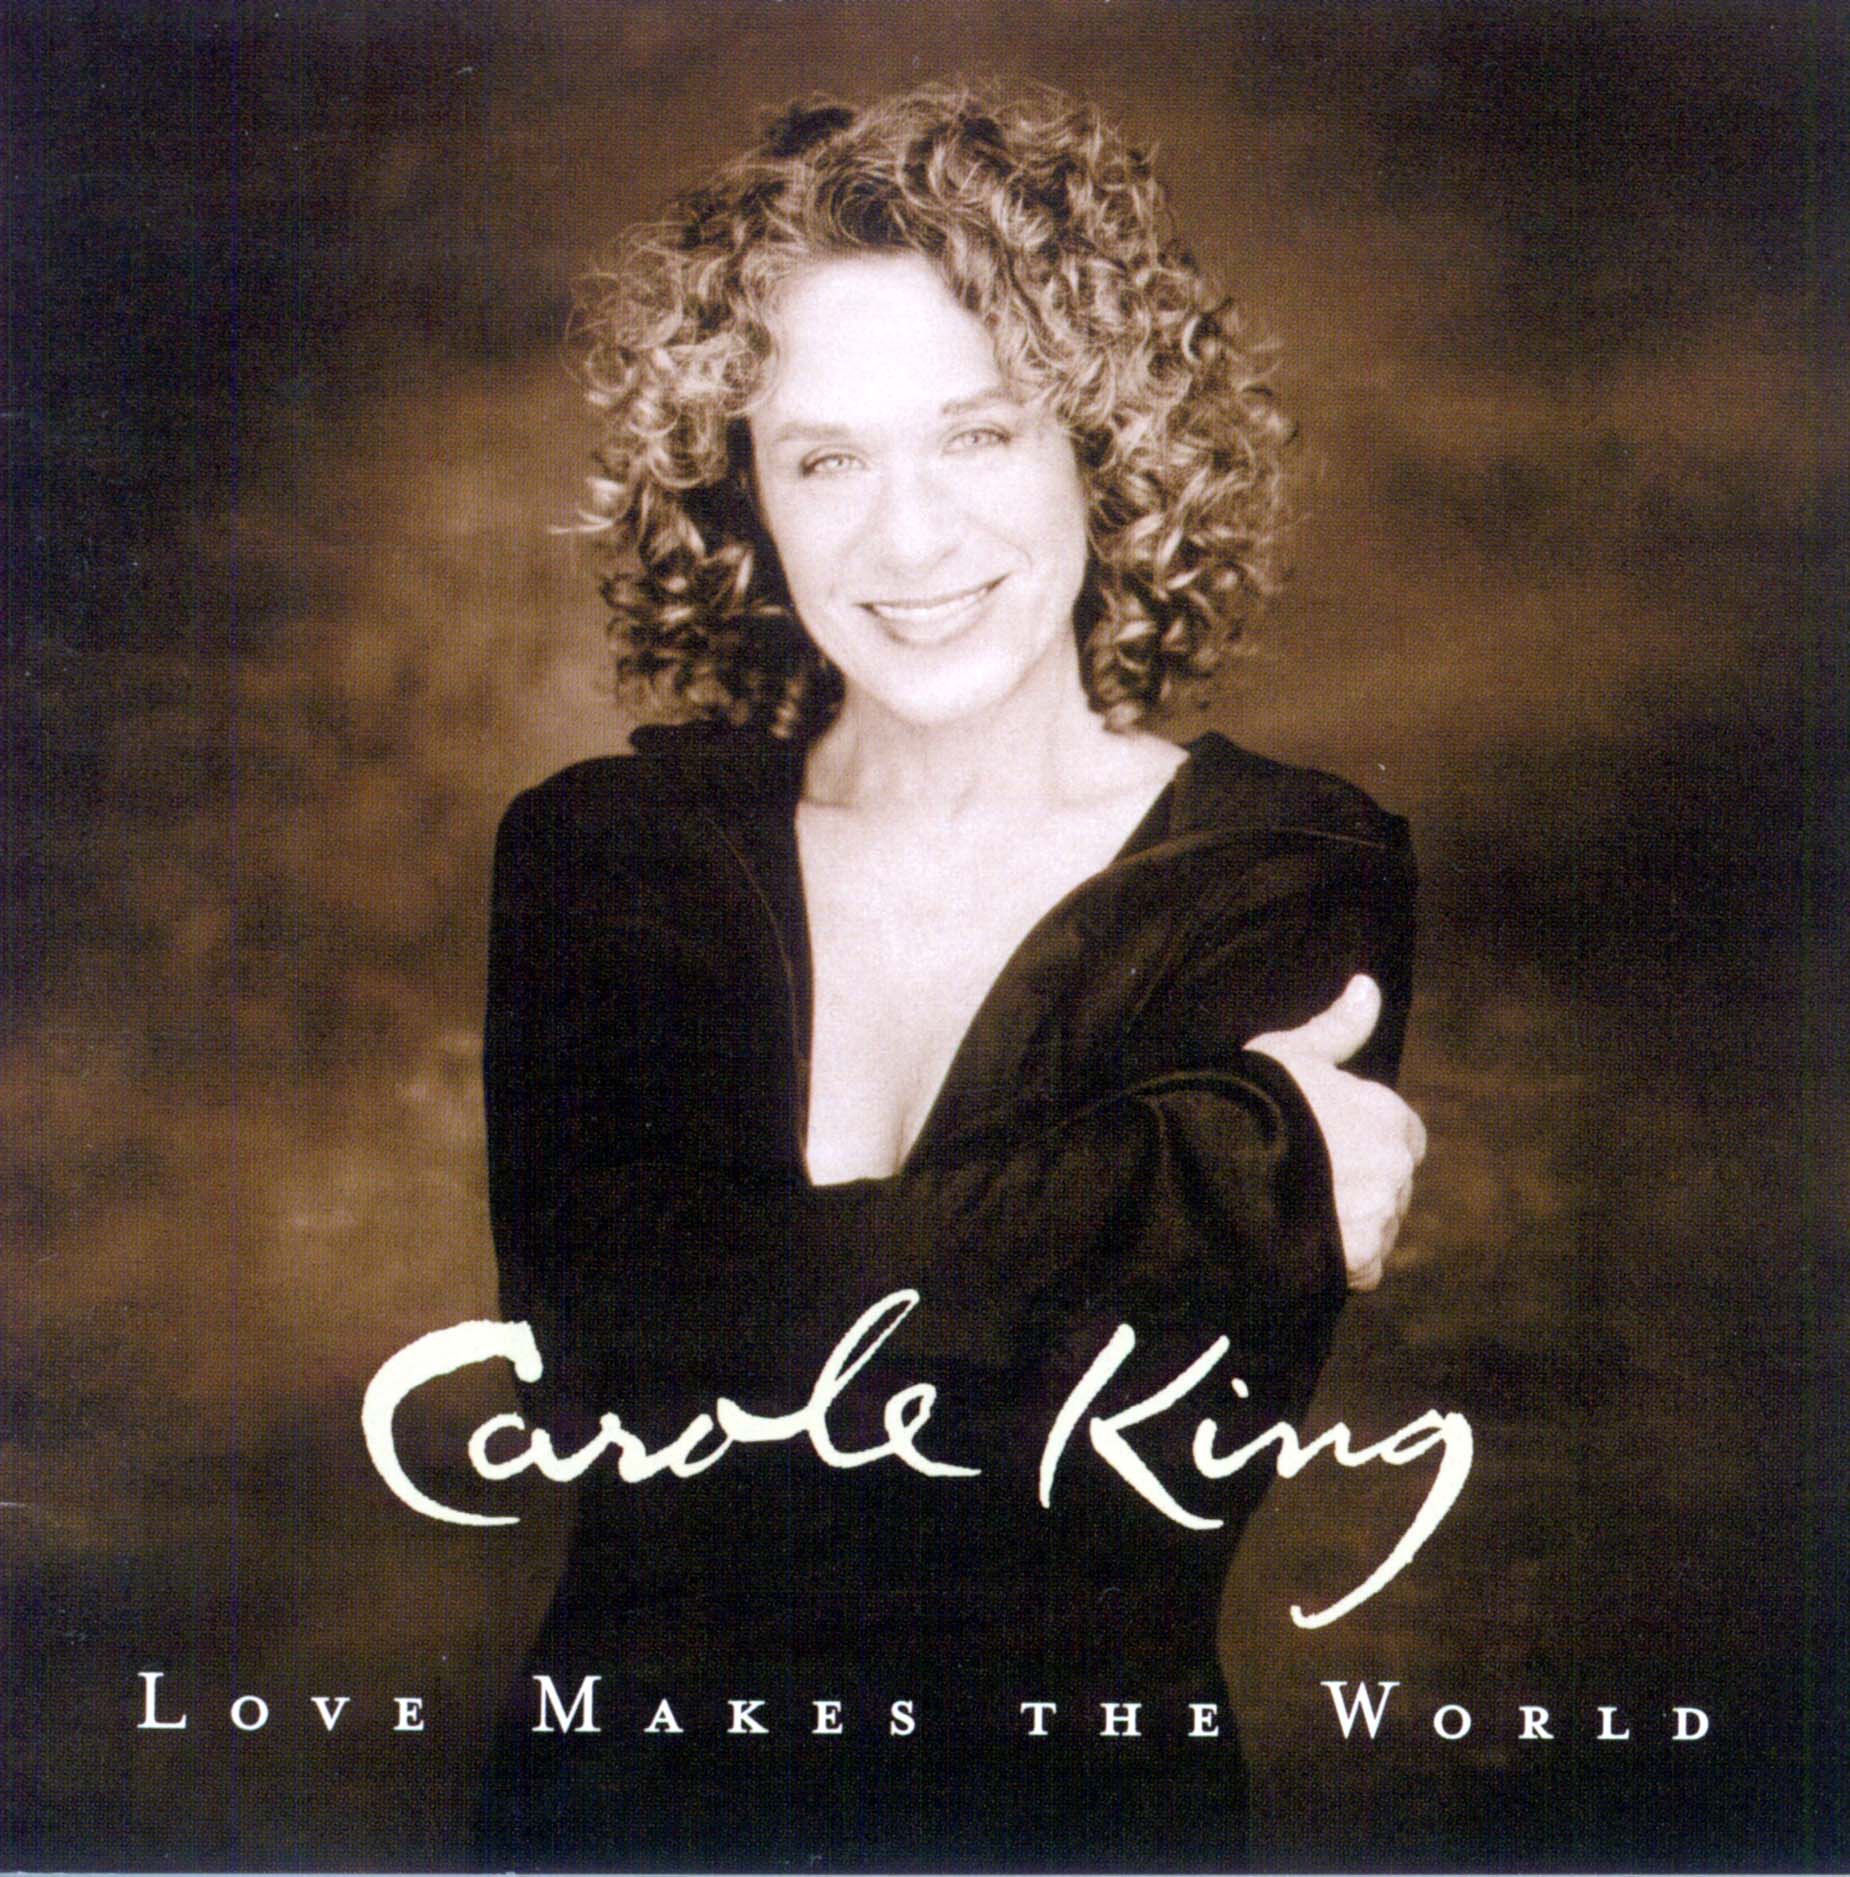 Happy birthday songwriter Carole King born 1942! 